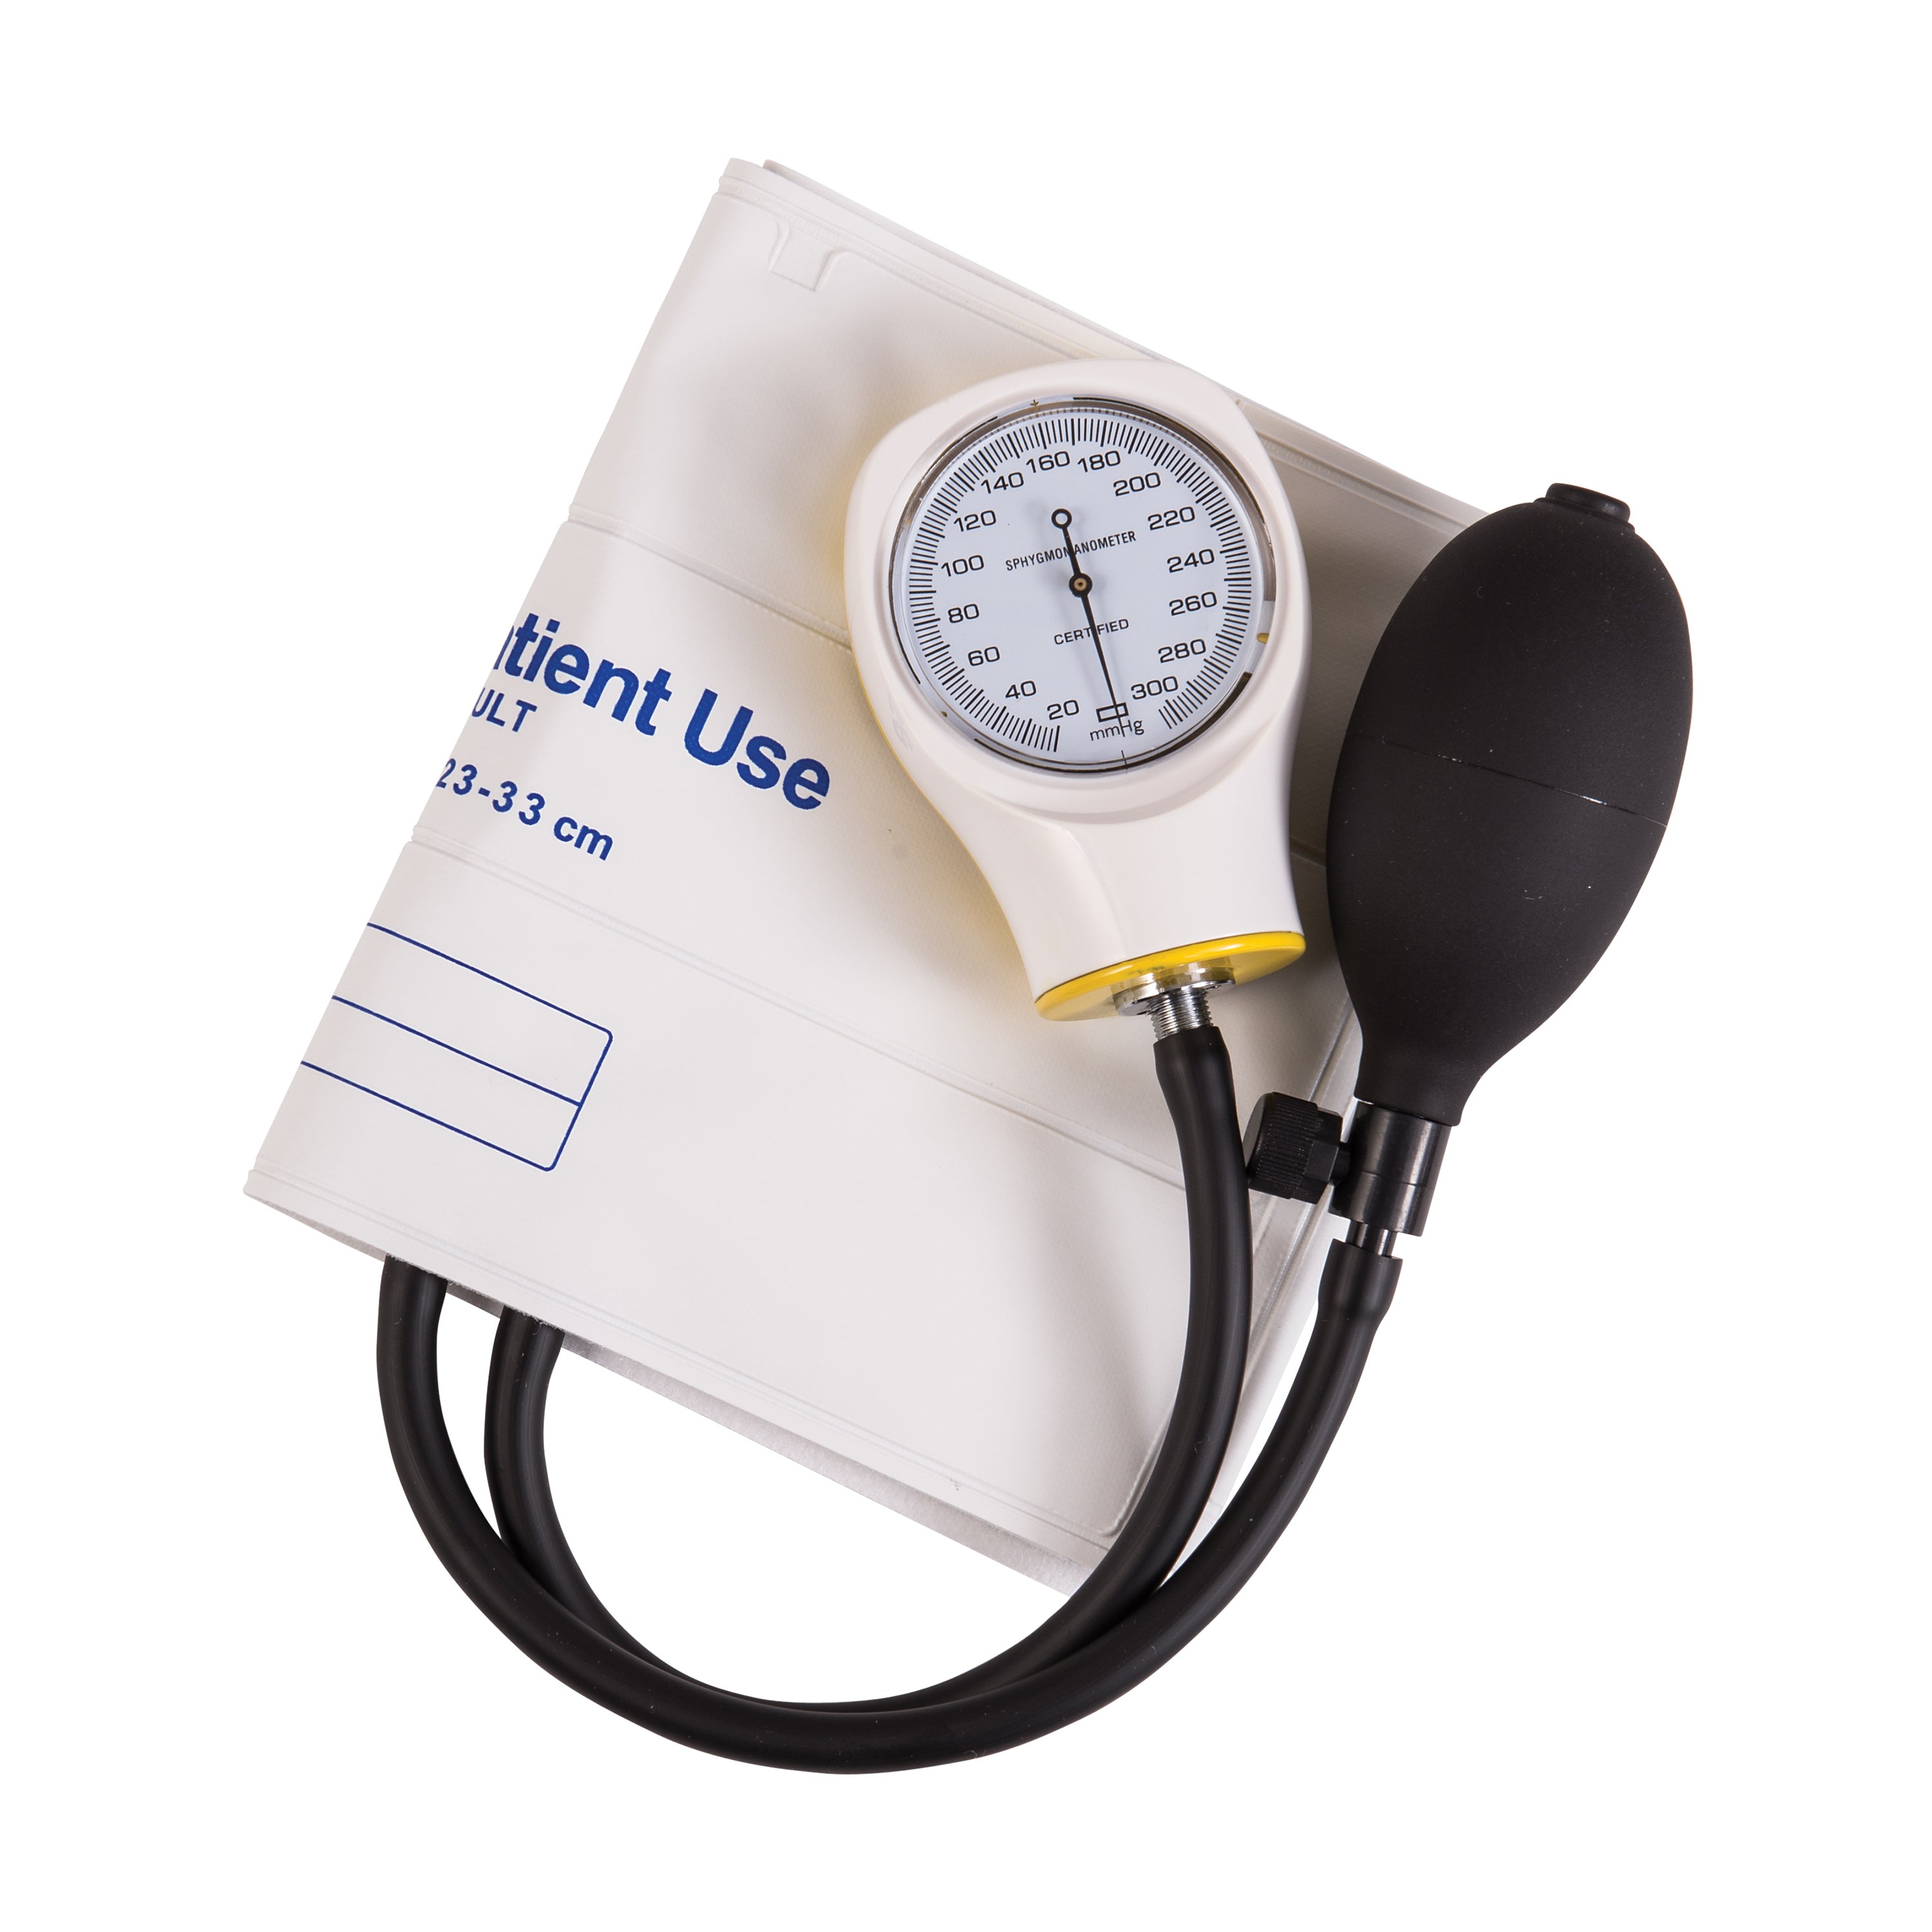 Mabis Single-Patient Use Sphygmomanometer AM-06-148-191